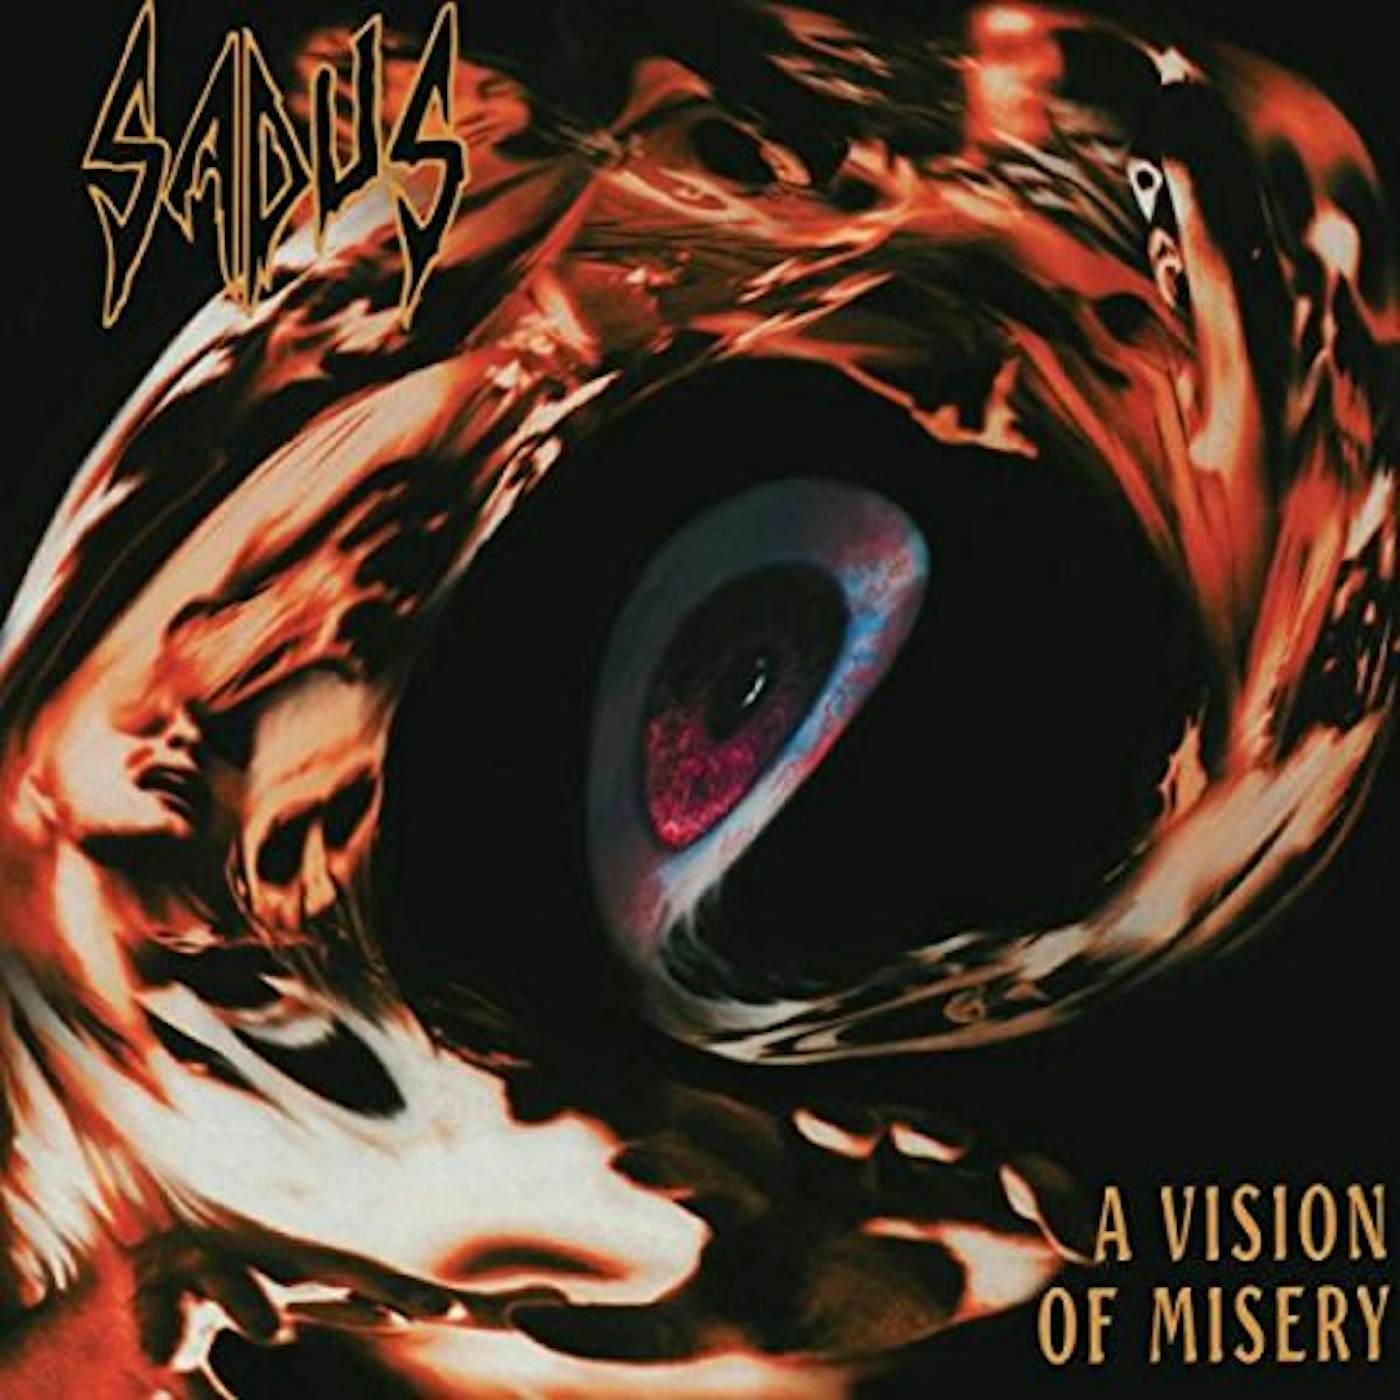 Sadus VISION OF MISERY CD